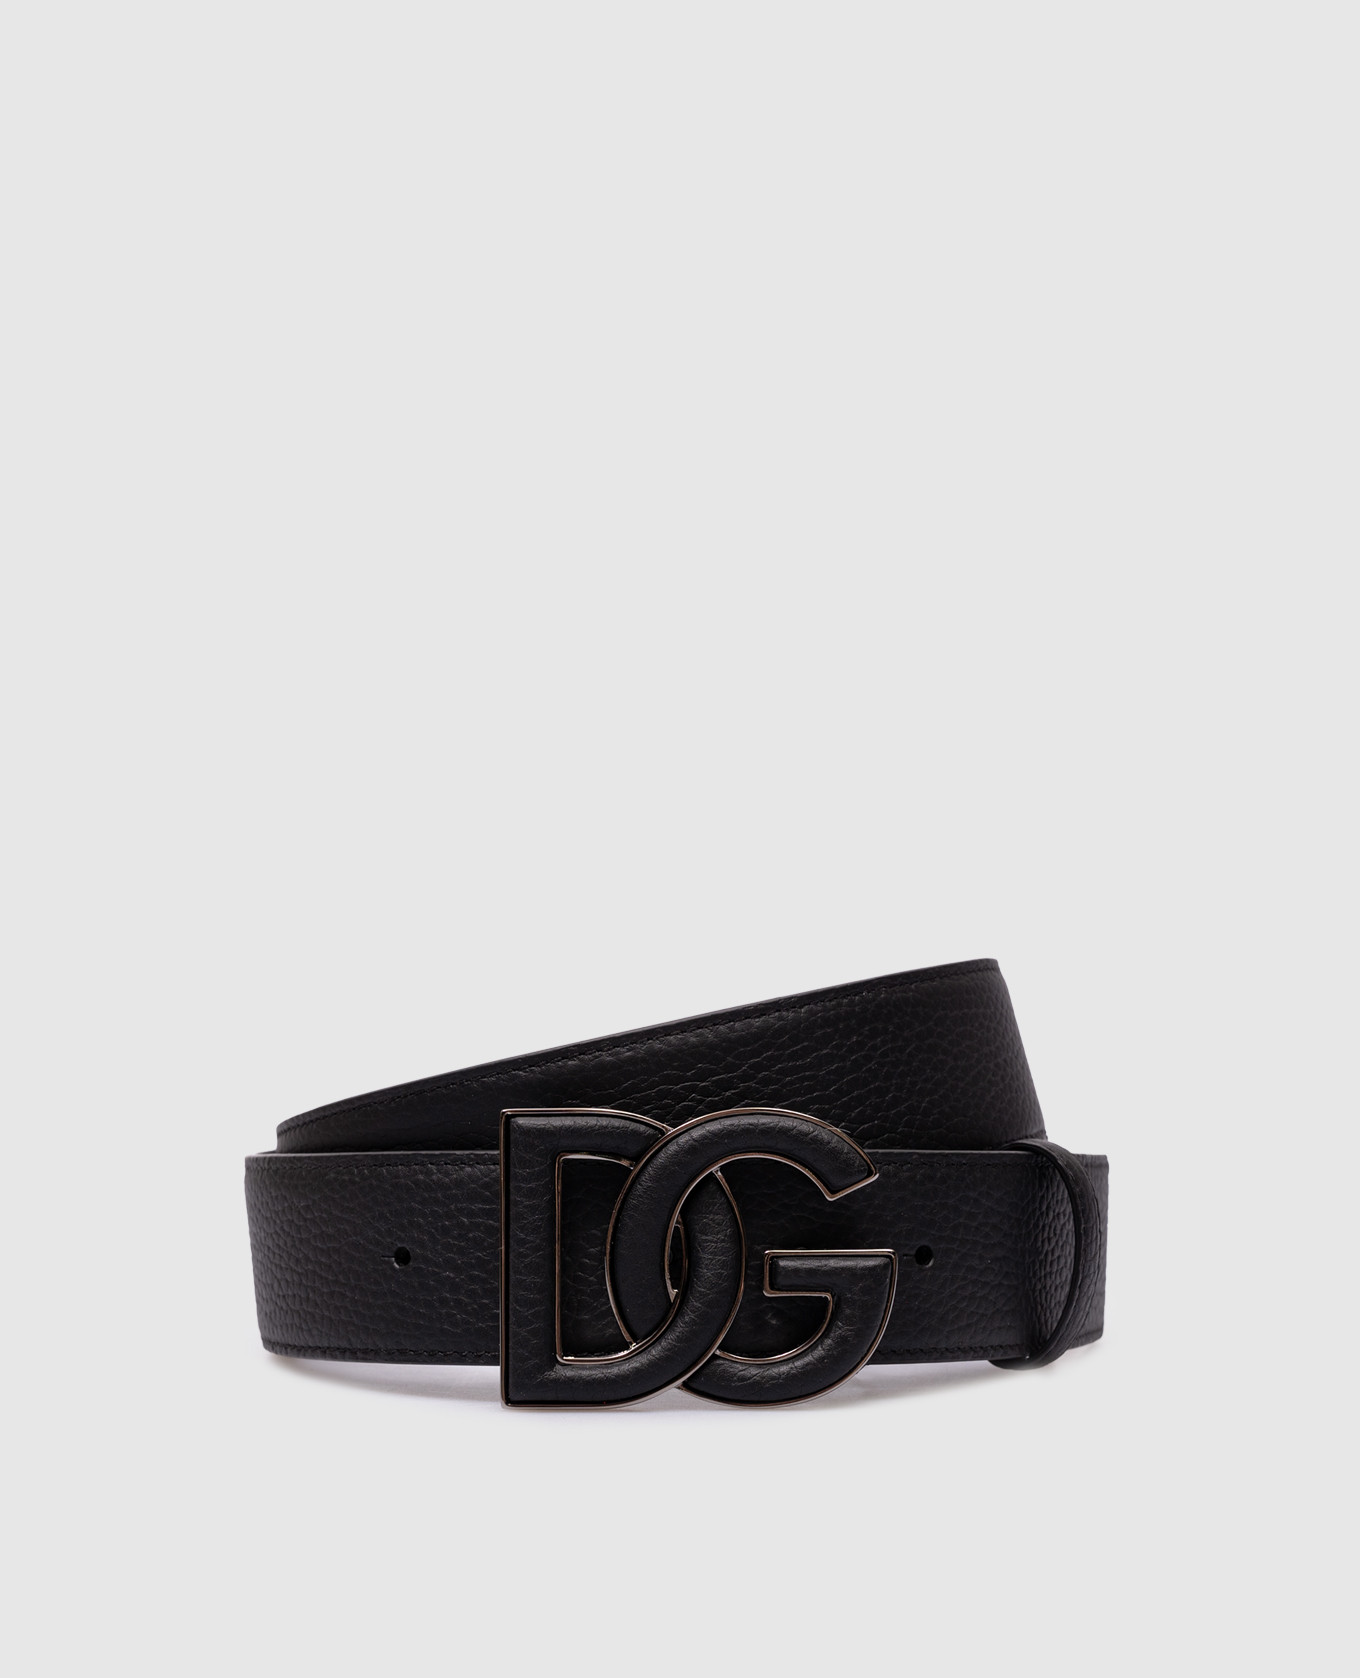 Black leather strap with DG logo